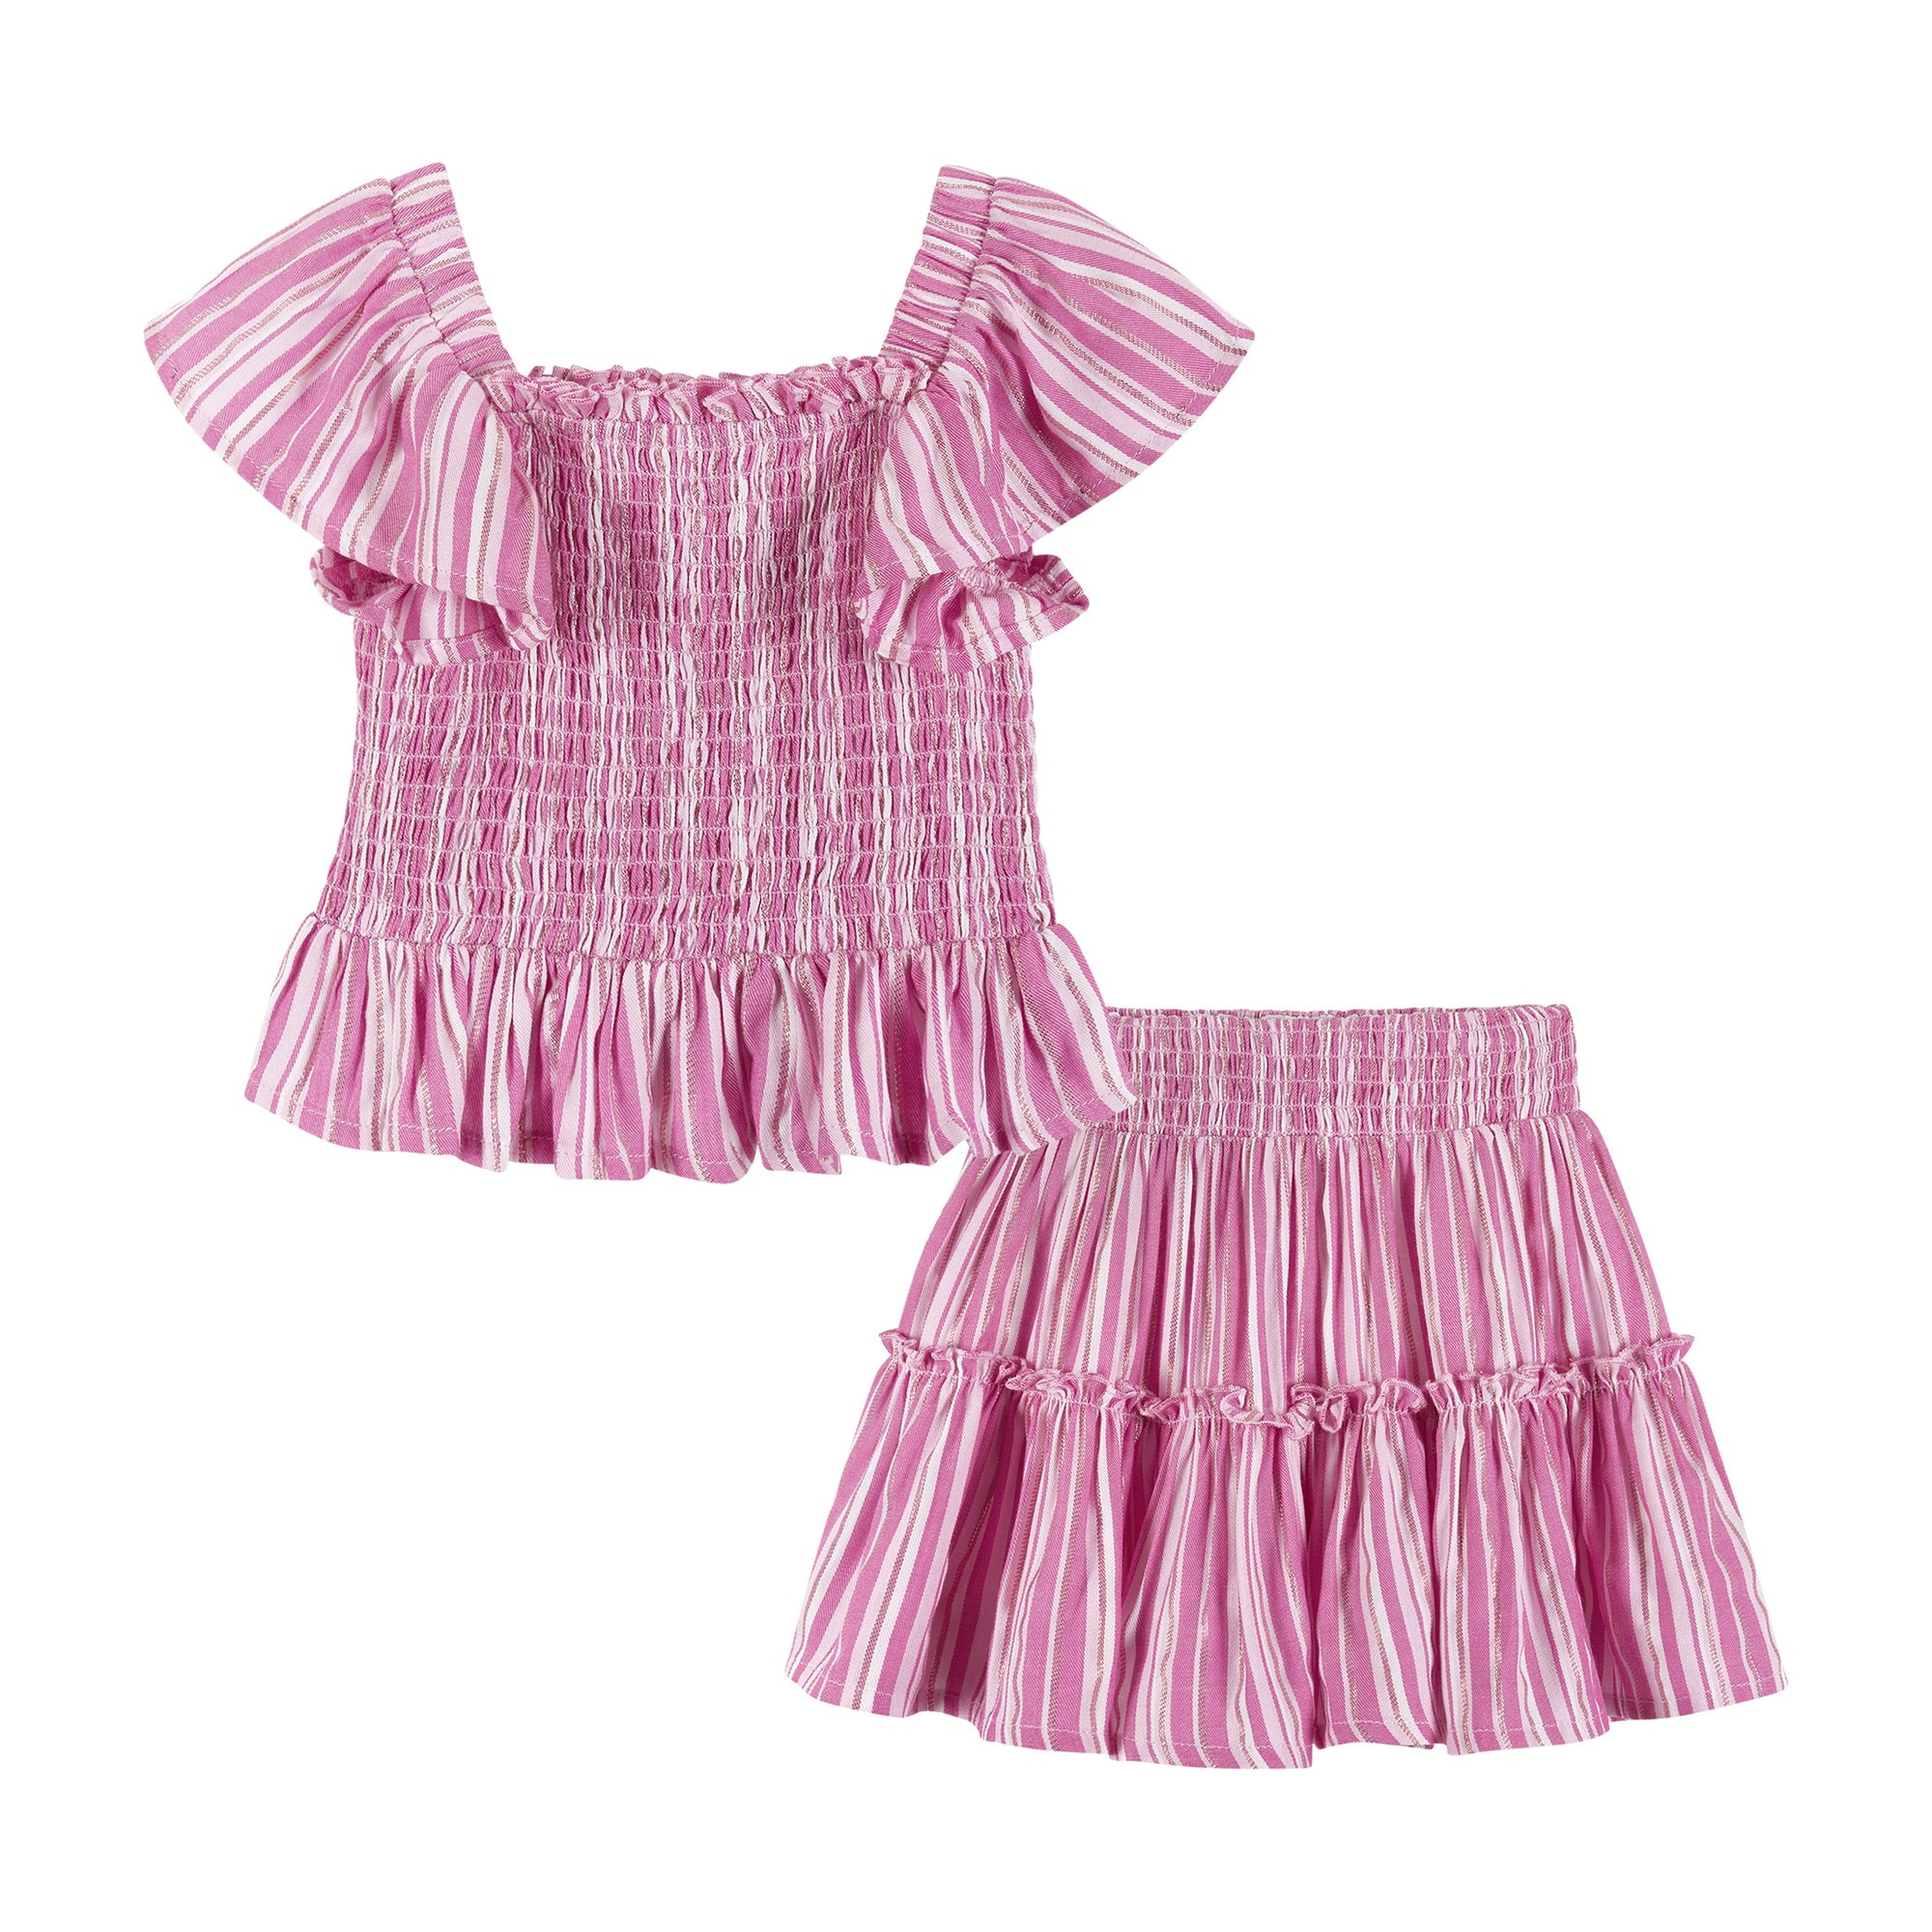 Pink Striped Smocked Top & Skirt Set